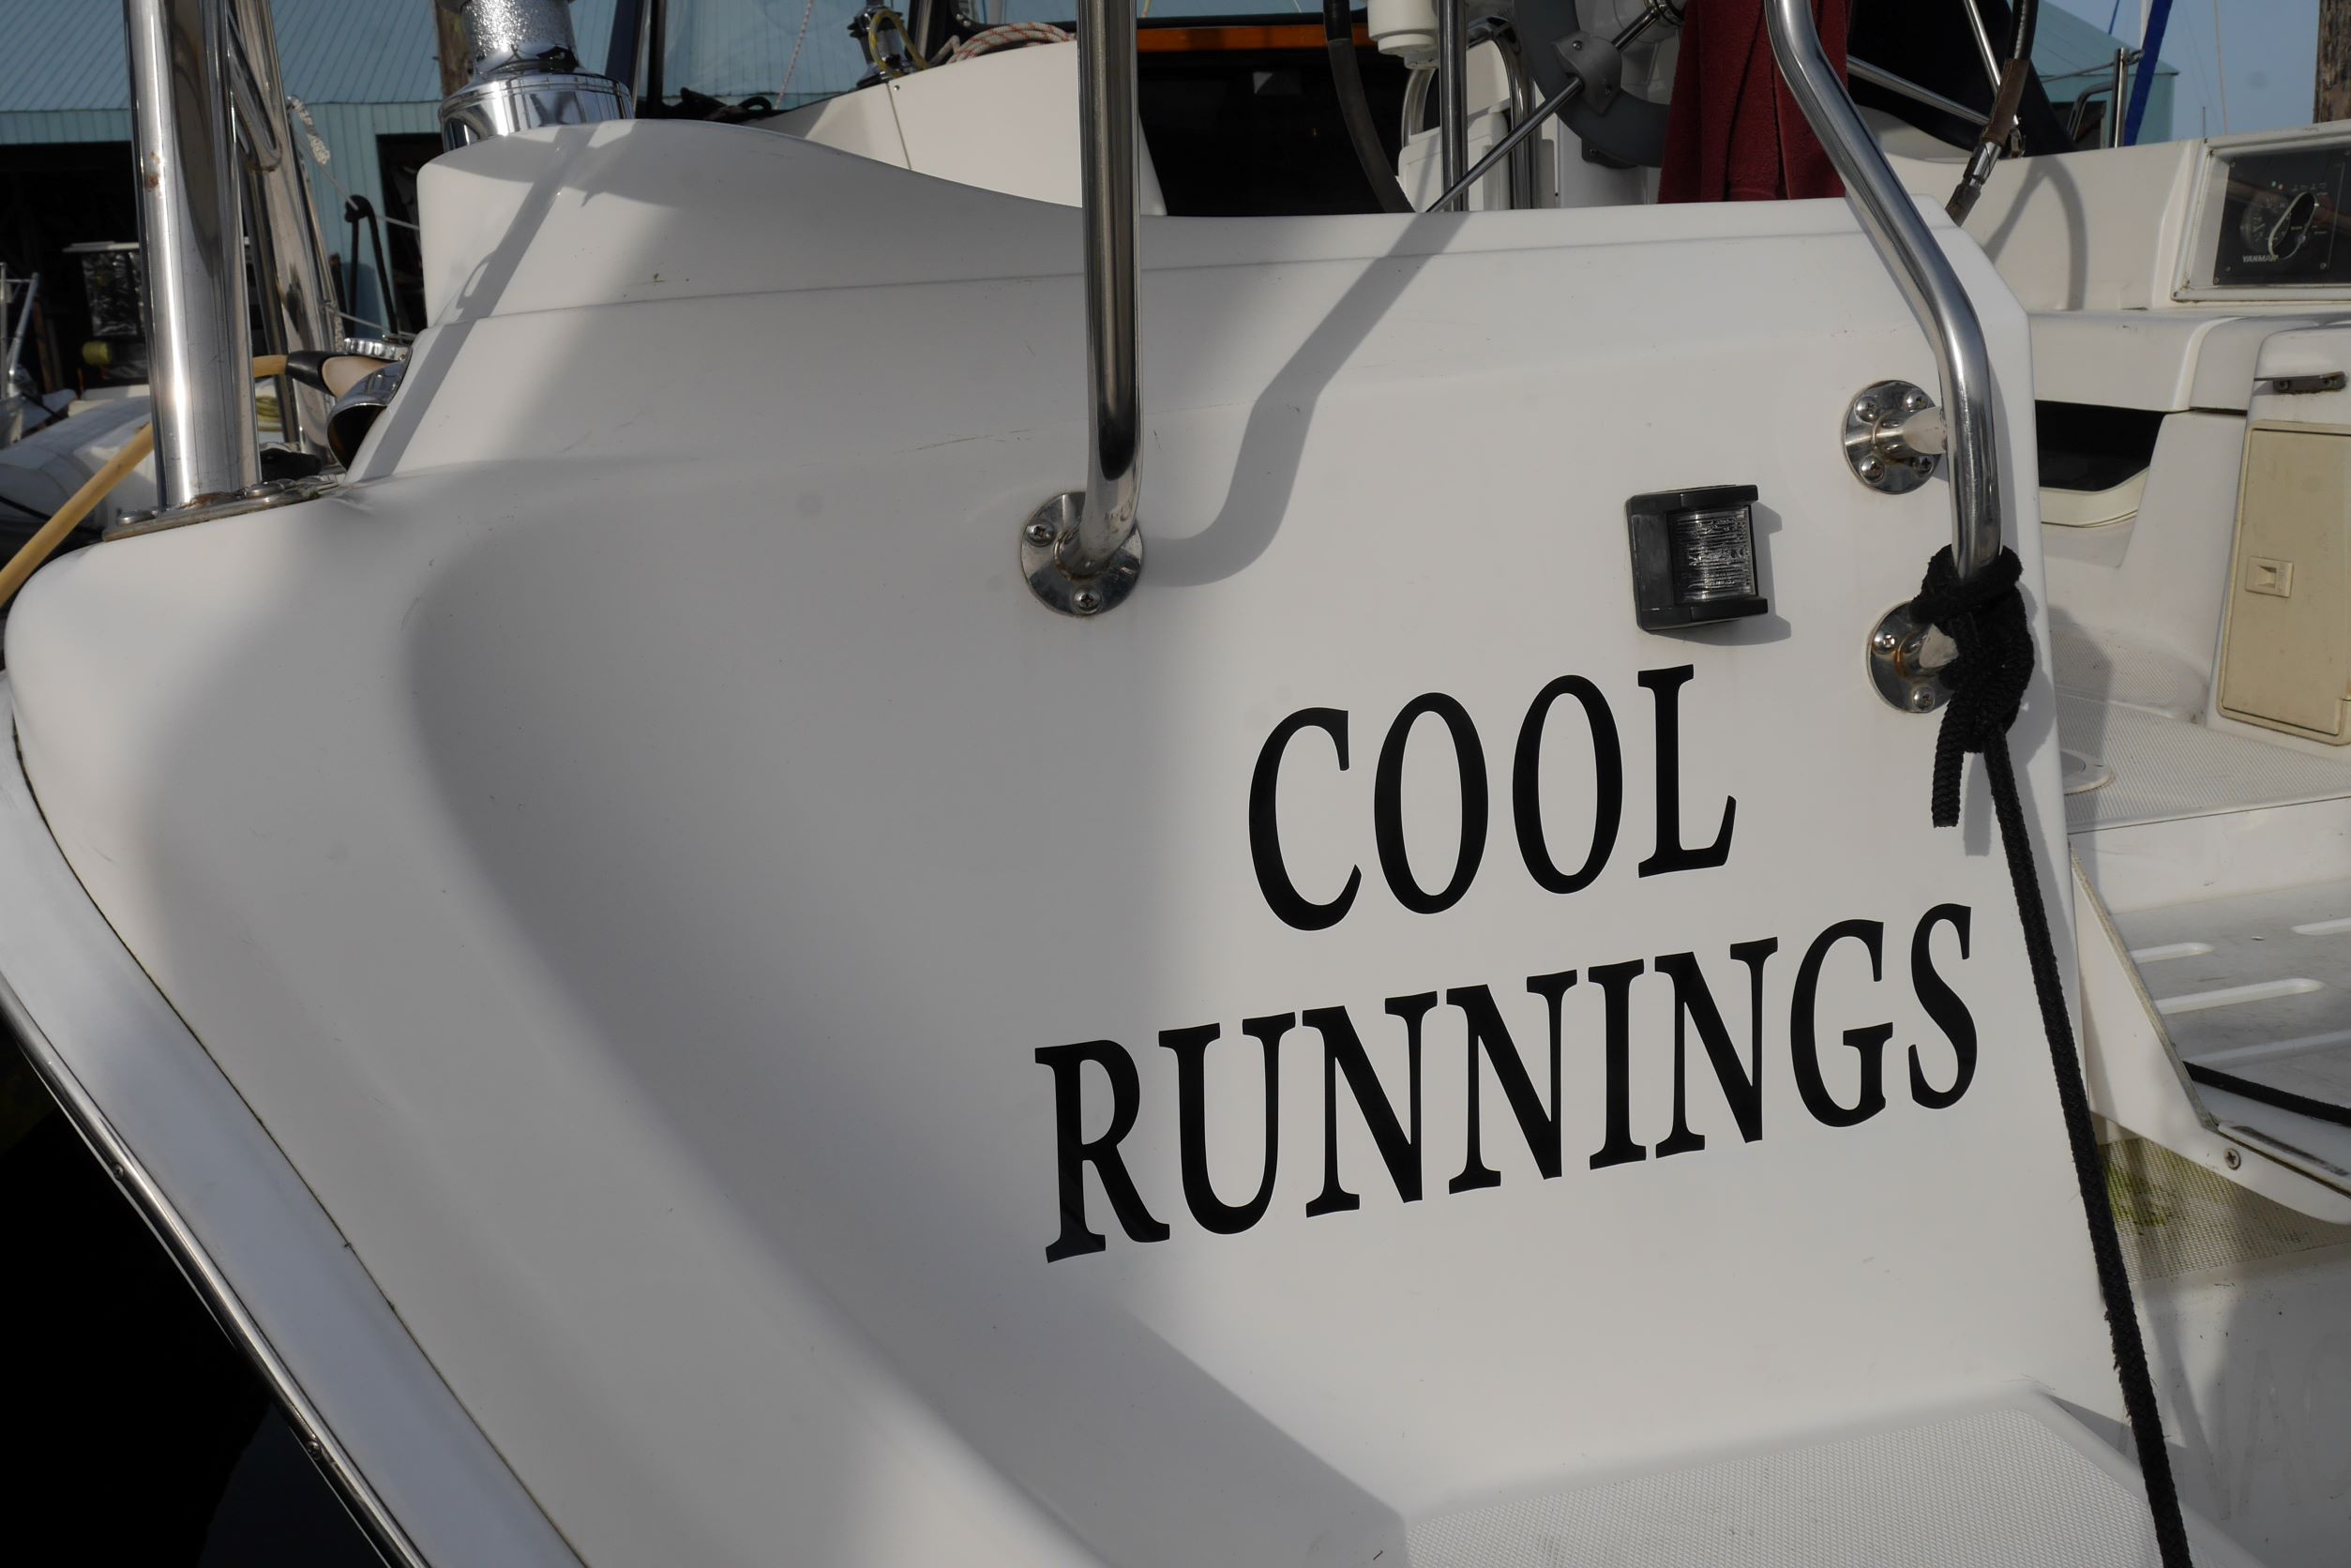 Cool Runnings-New name decal resized.JPG